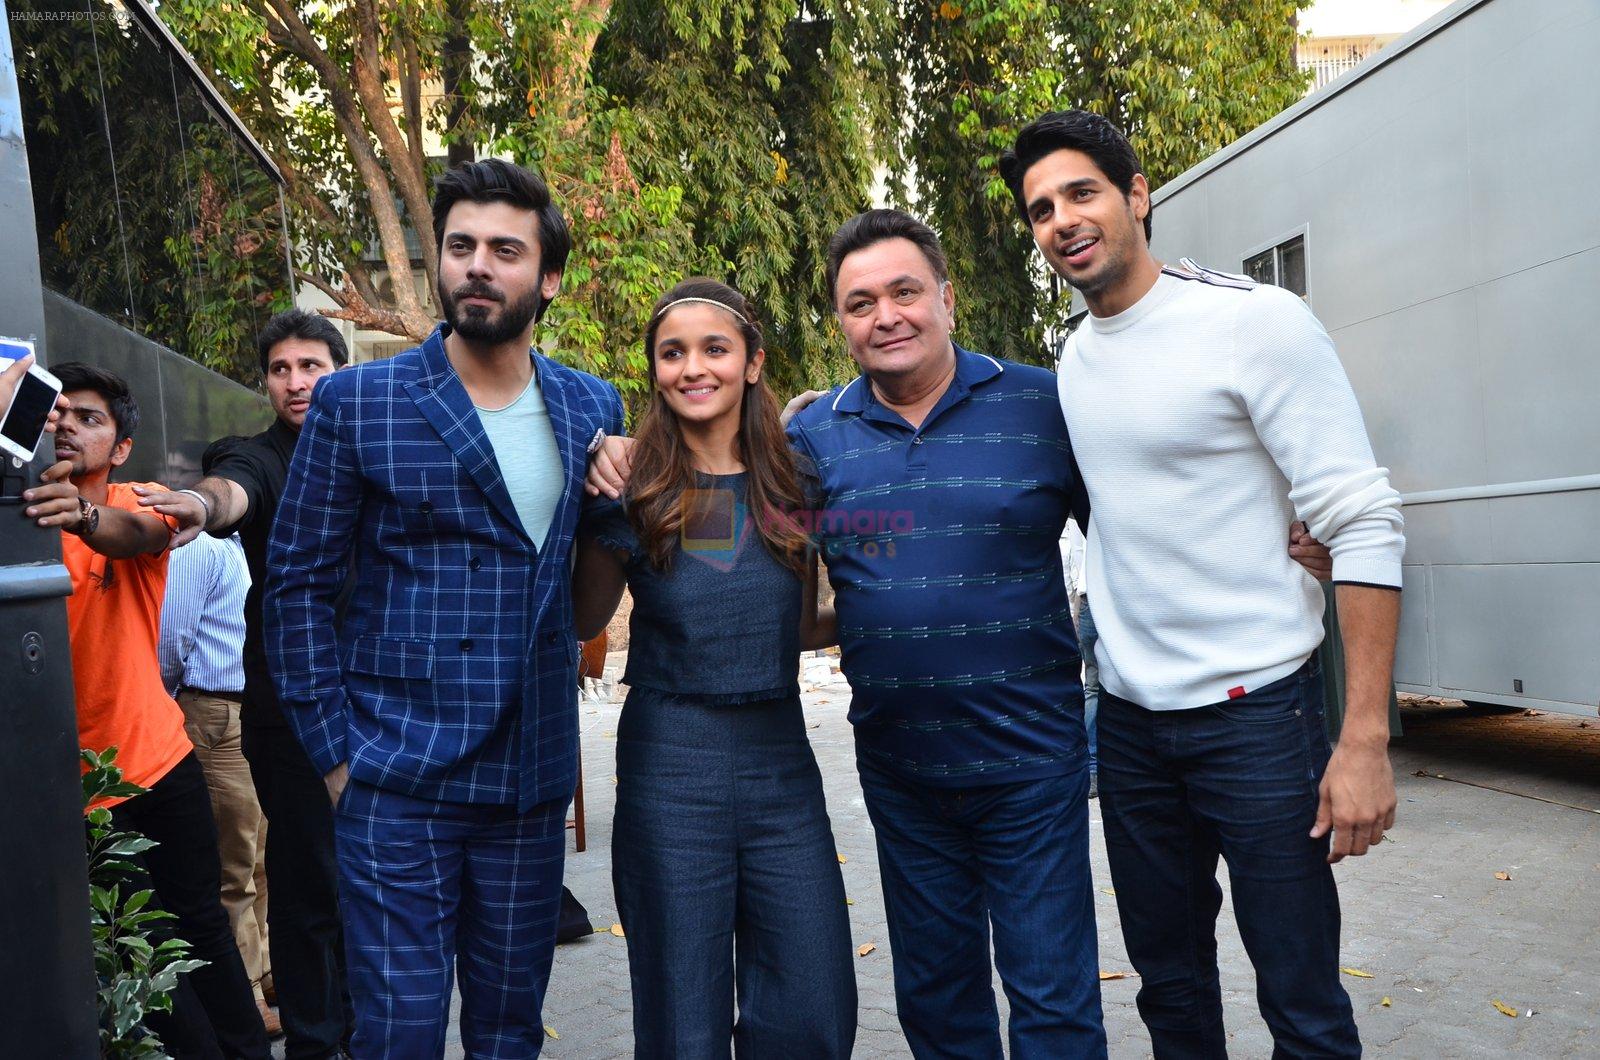 Alia Bhatt, Sidharth Malhotra, Fawad Khan, Rishi Kapoor at Kapoor n Sons photo shoot on 9th March 2016